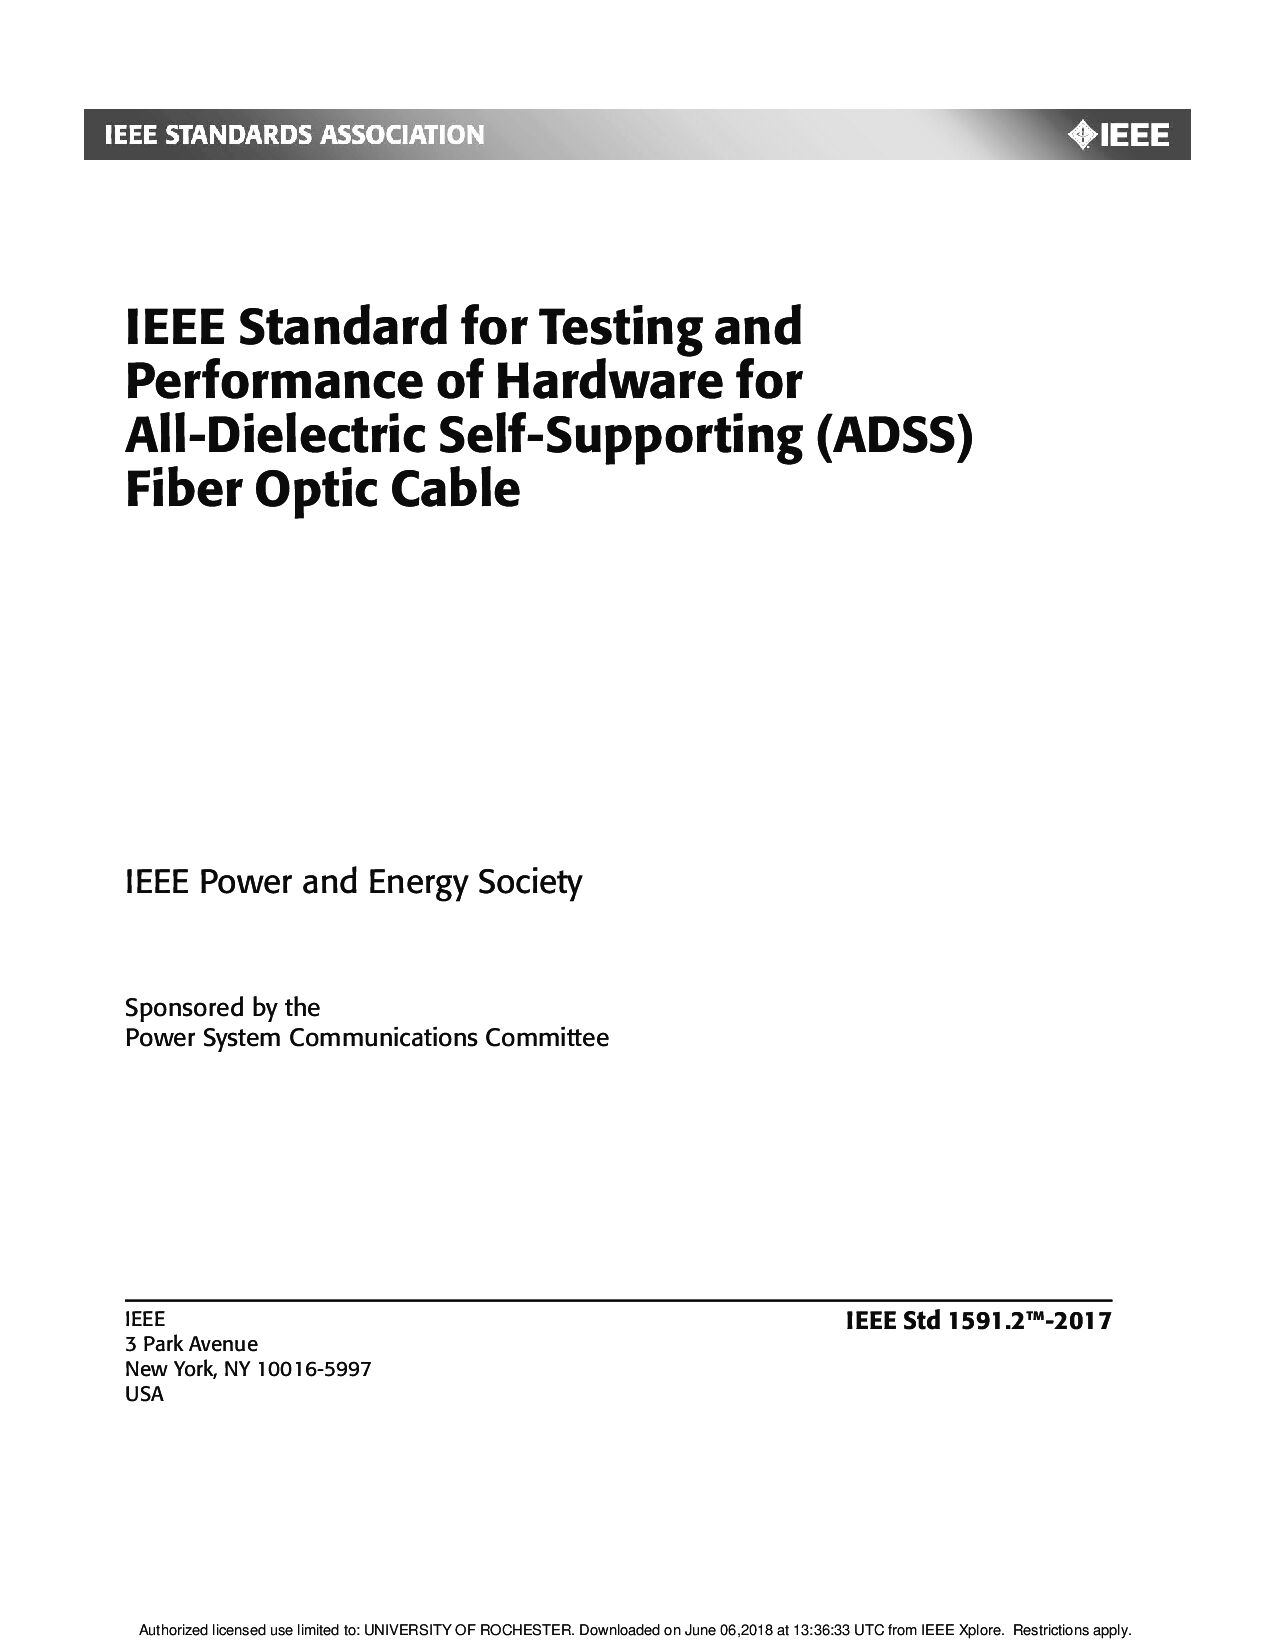 IEEE Std 1591.2-2017